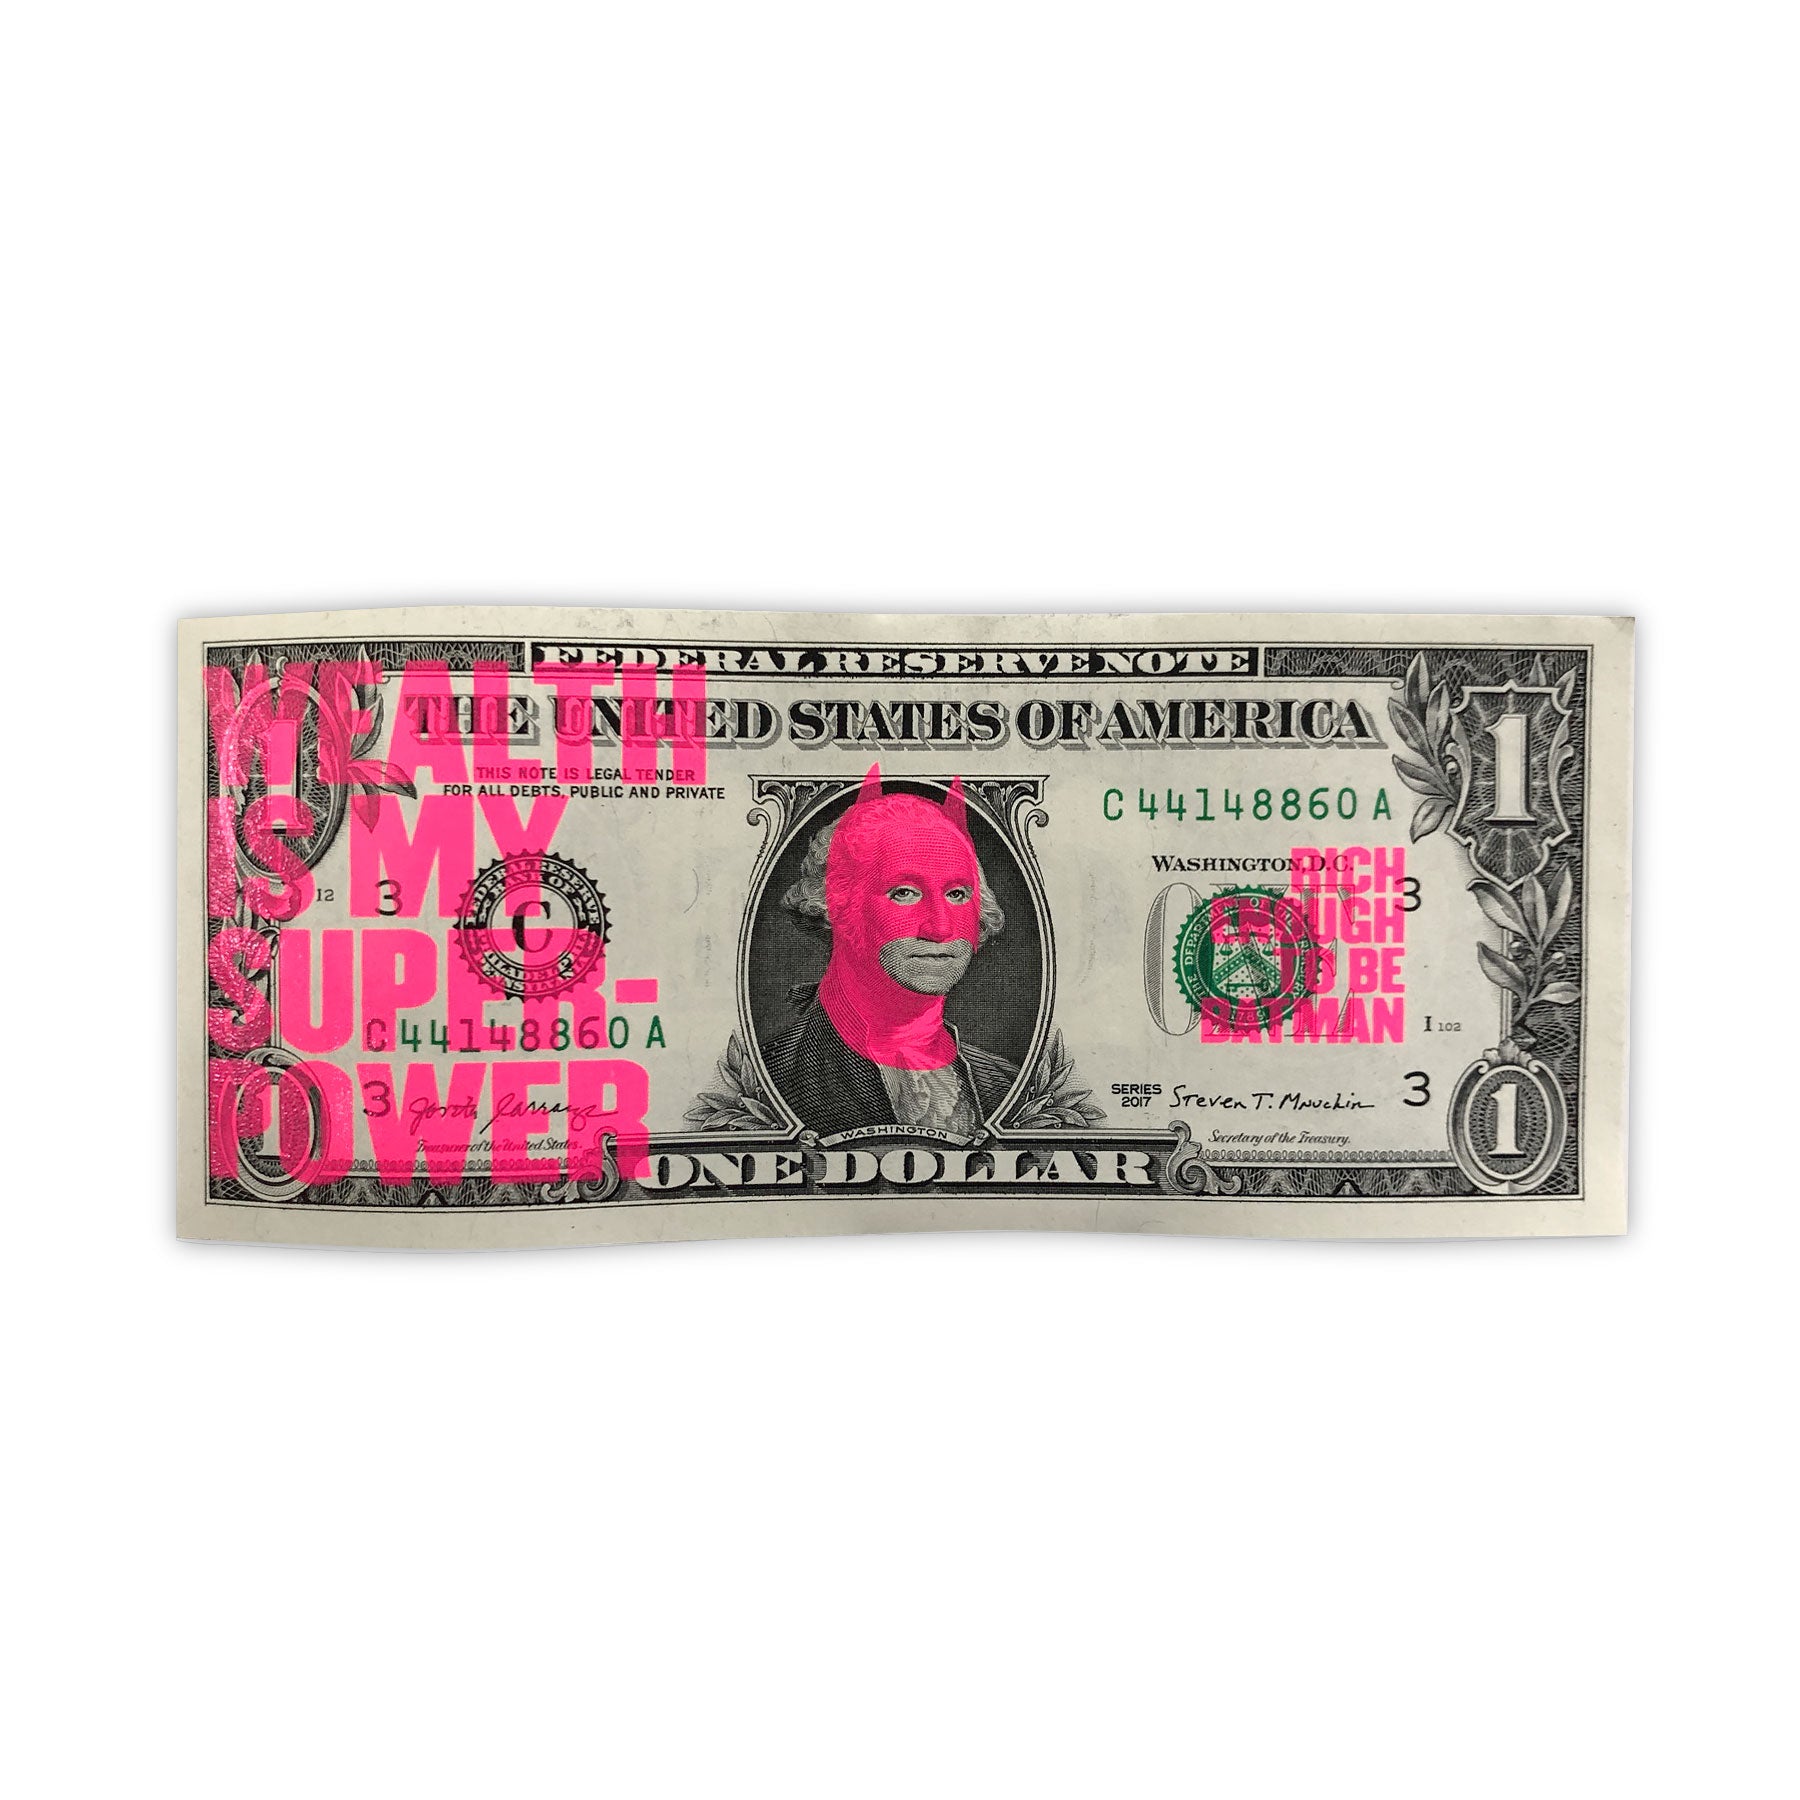 Rich Enough to be Batman - US Dollar Note 3rd edition by artist Heath Kane